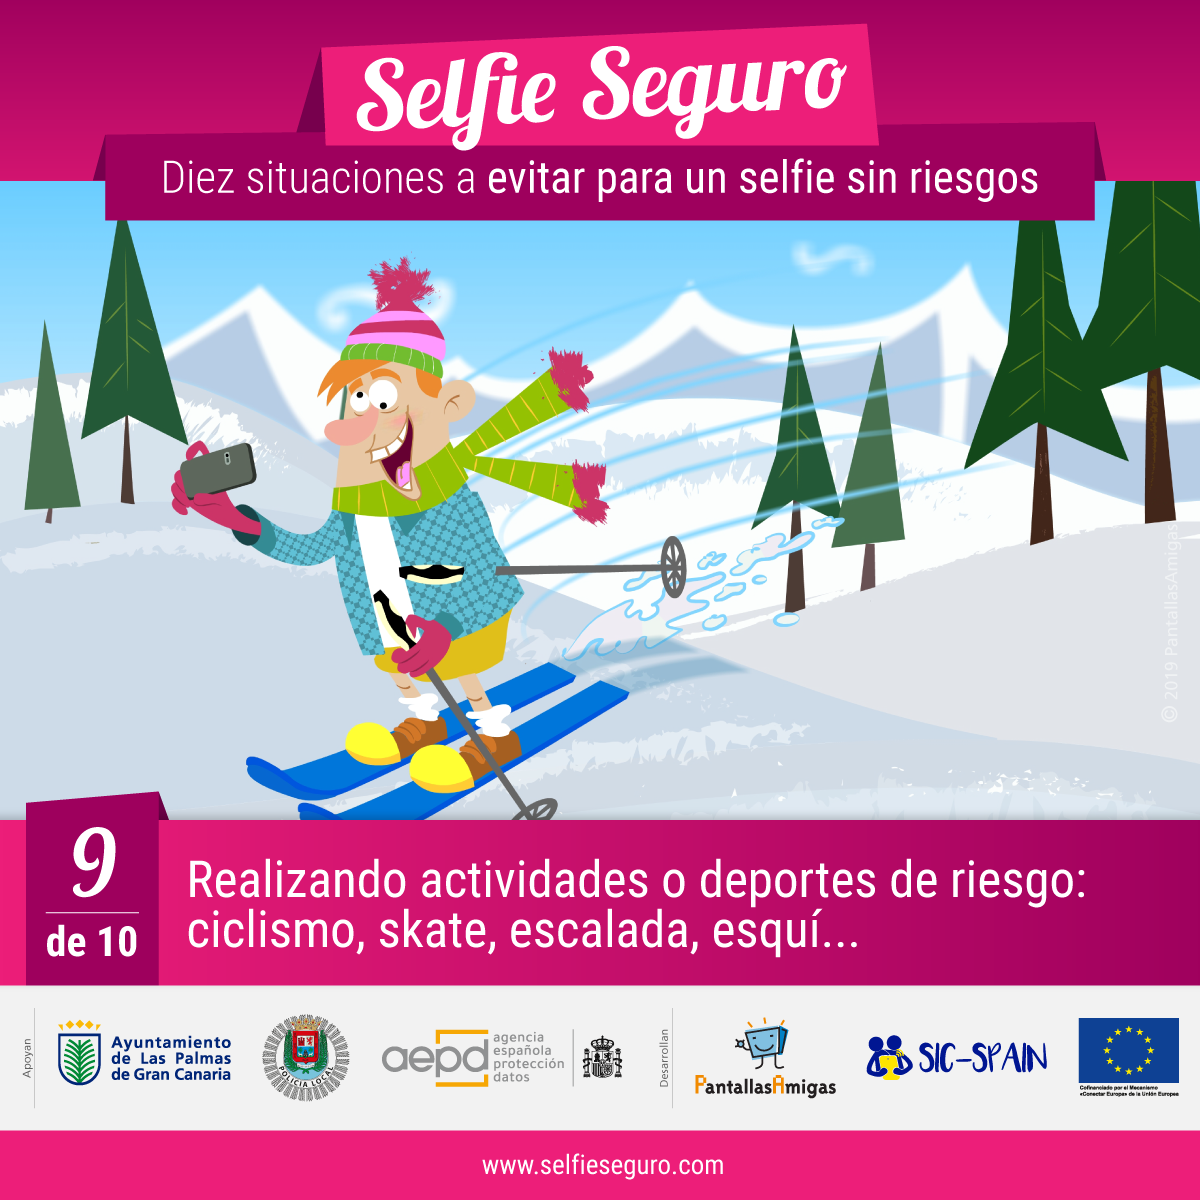 Evitar selfies realizando actividades o deportes de riesgo: ciclismo, skate, escalada, esquí...